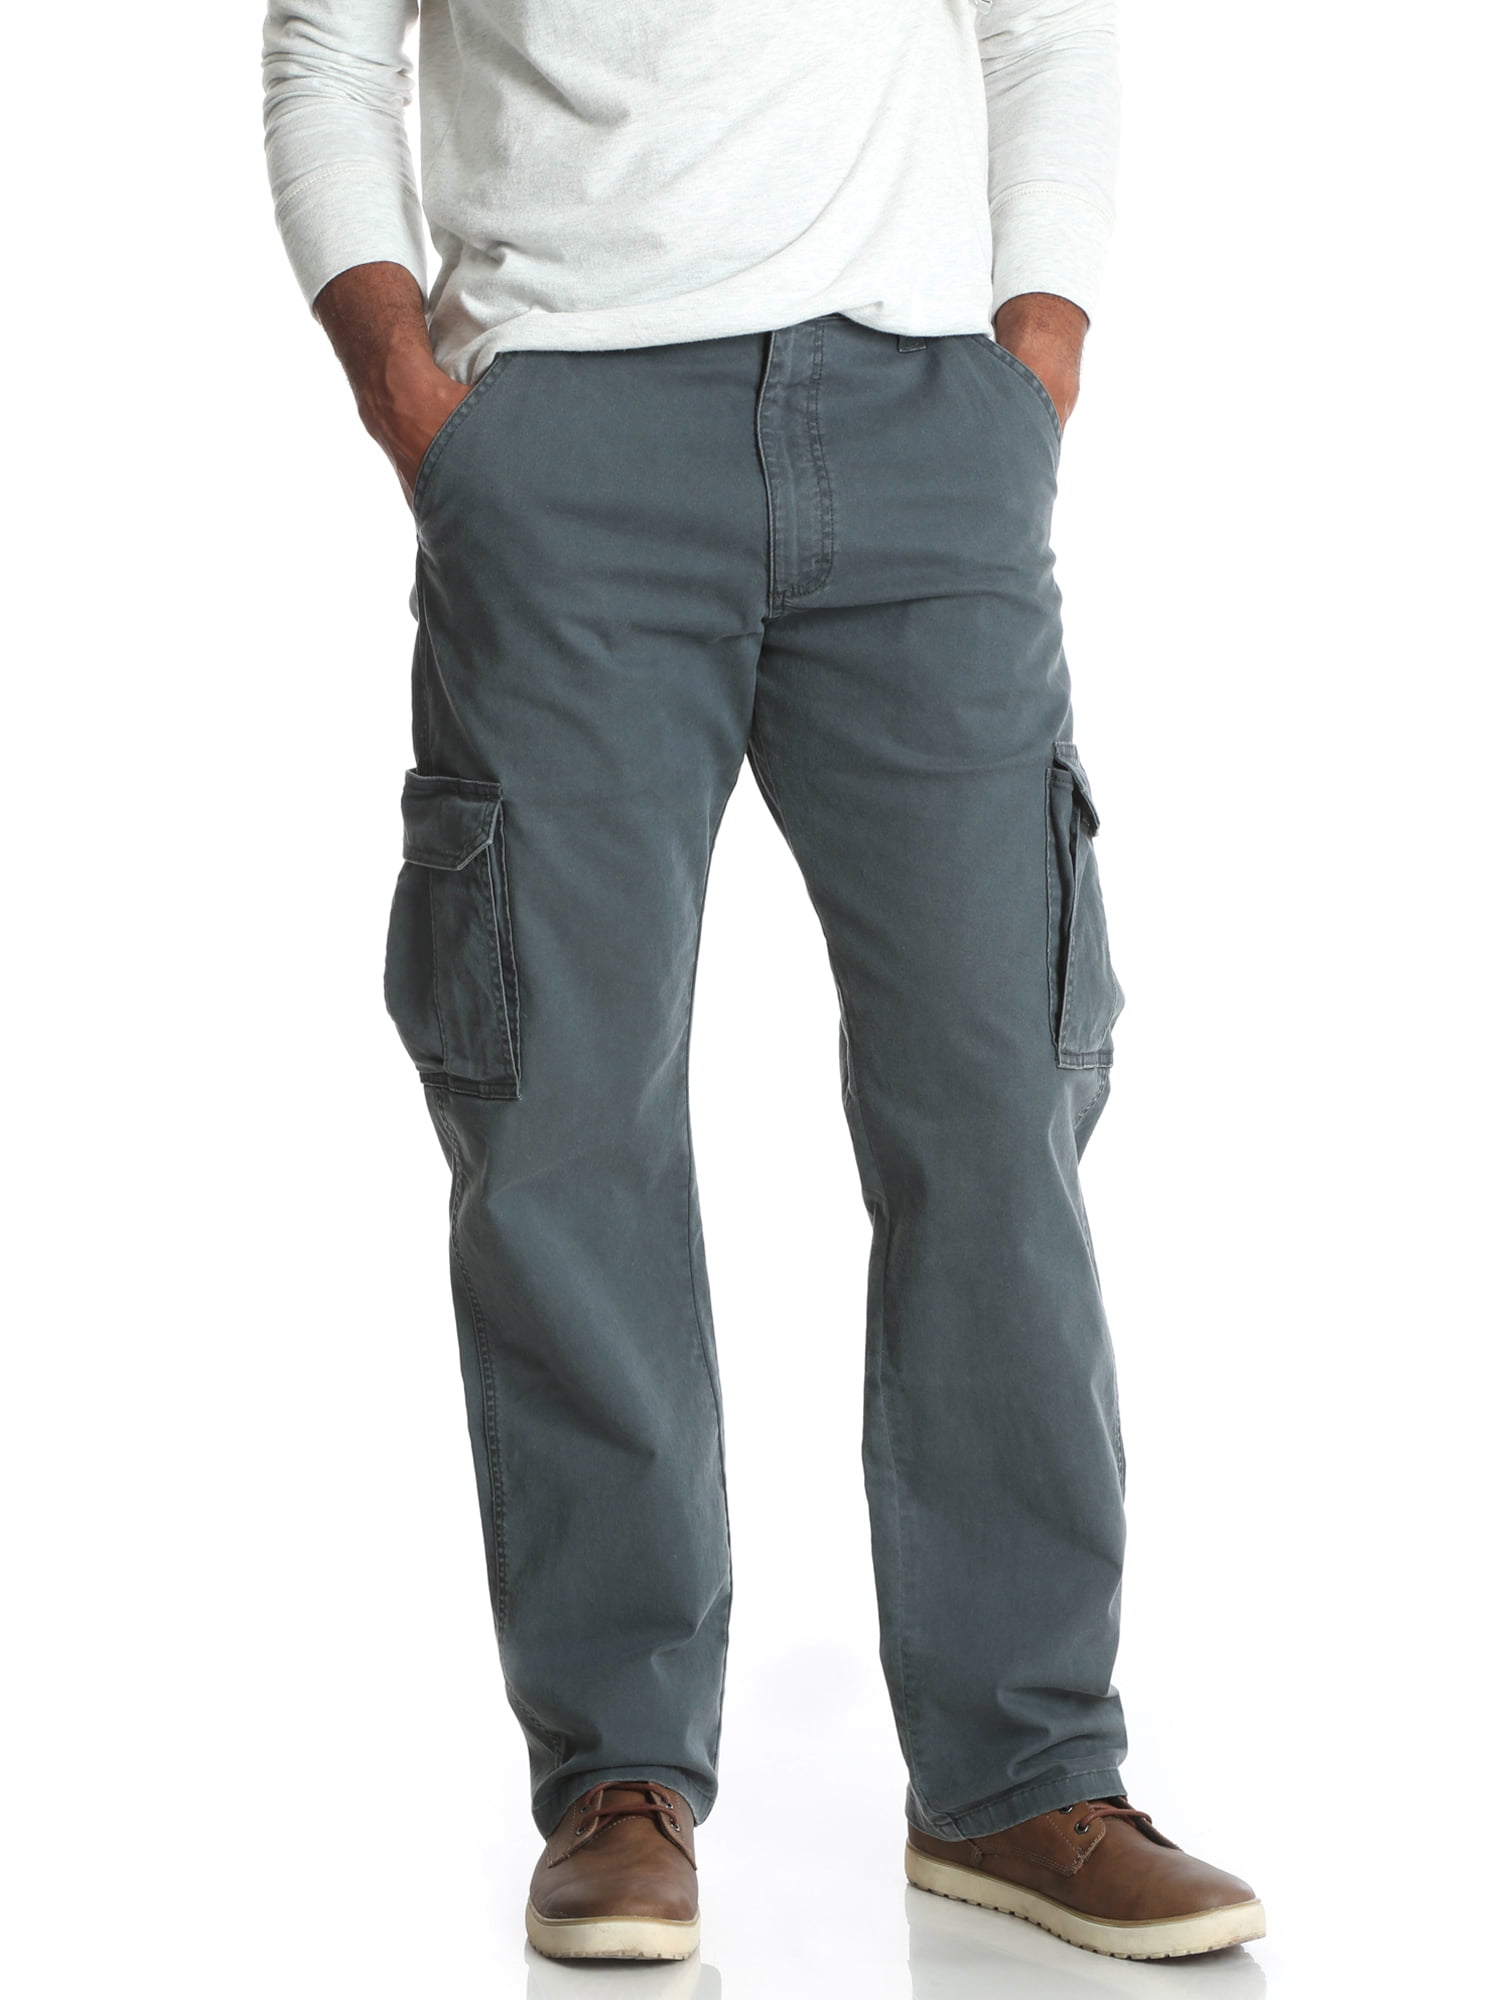 Buy Wrangler Men's Comfort Flex Waistband Relaxed Fit Cargo Pants Black  Tech Pocket Straight Leg, Black, 46W x 30L at Amazon.in